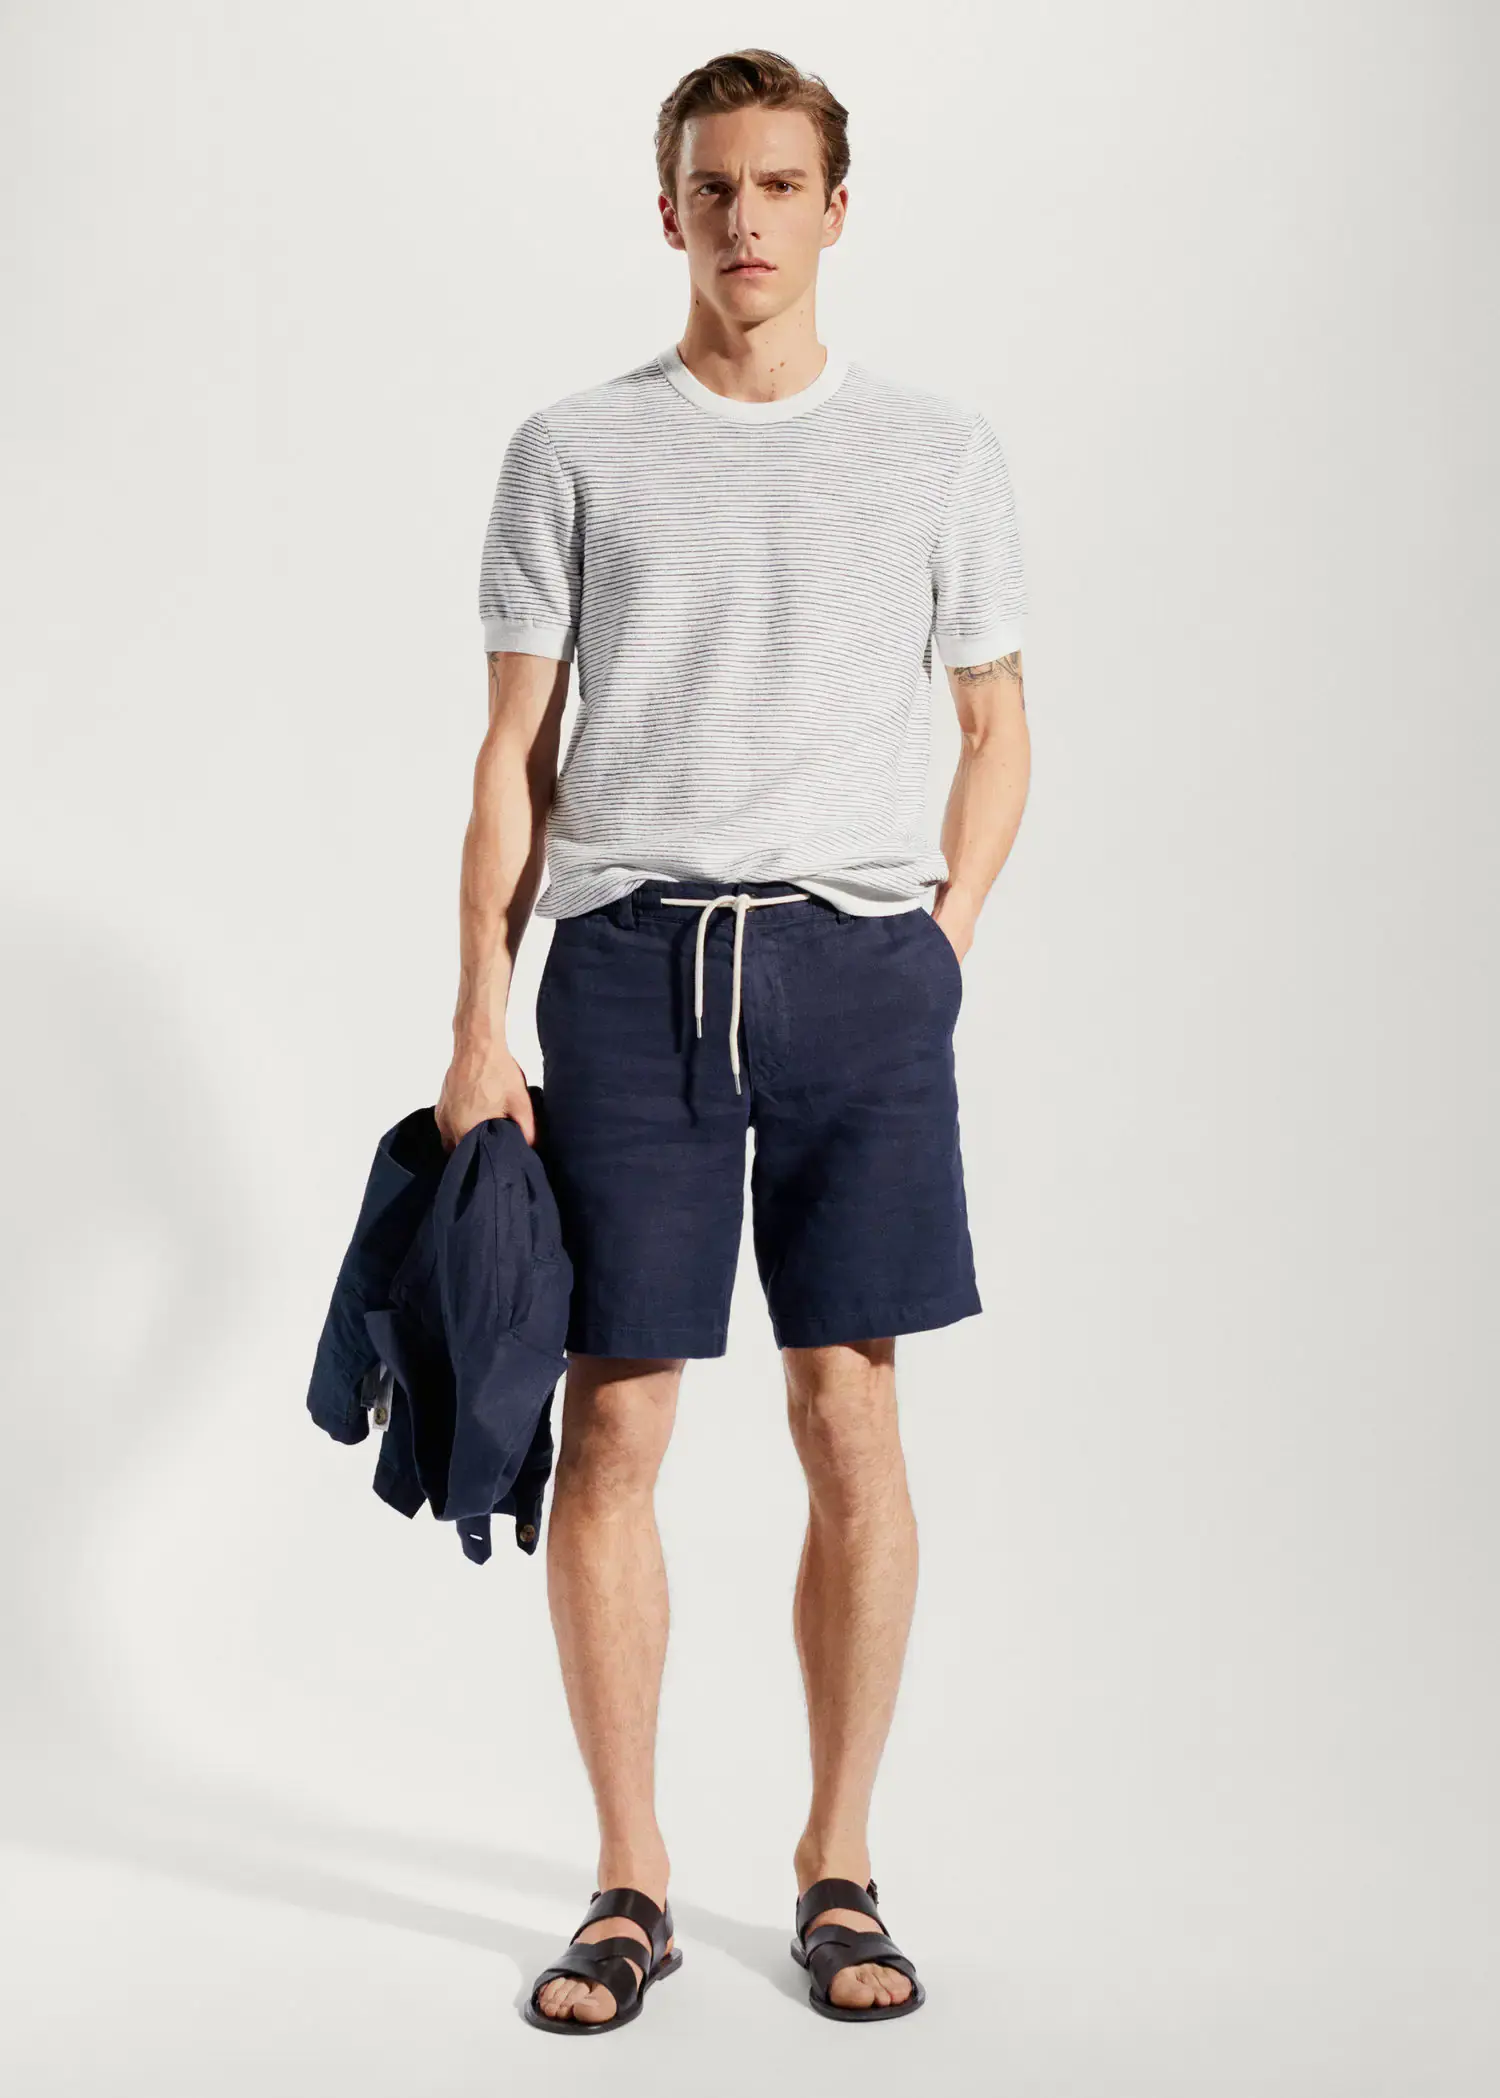 Mango 100% linen bermuda shorts with drawstring. a young man in shorts and a white shirt. 